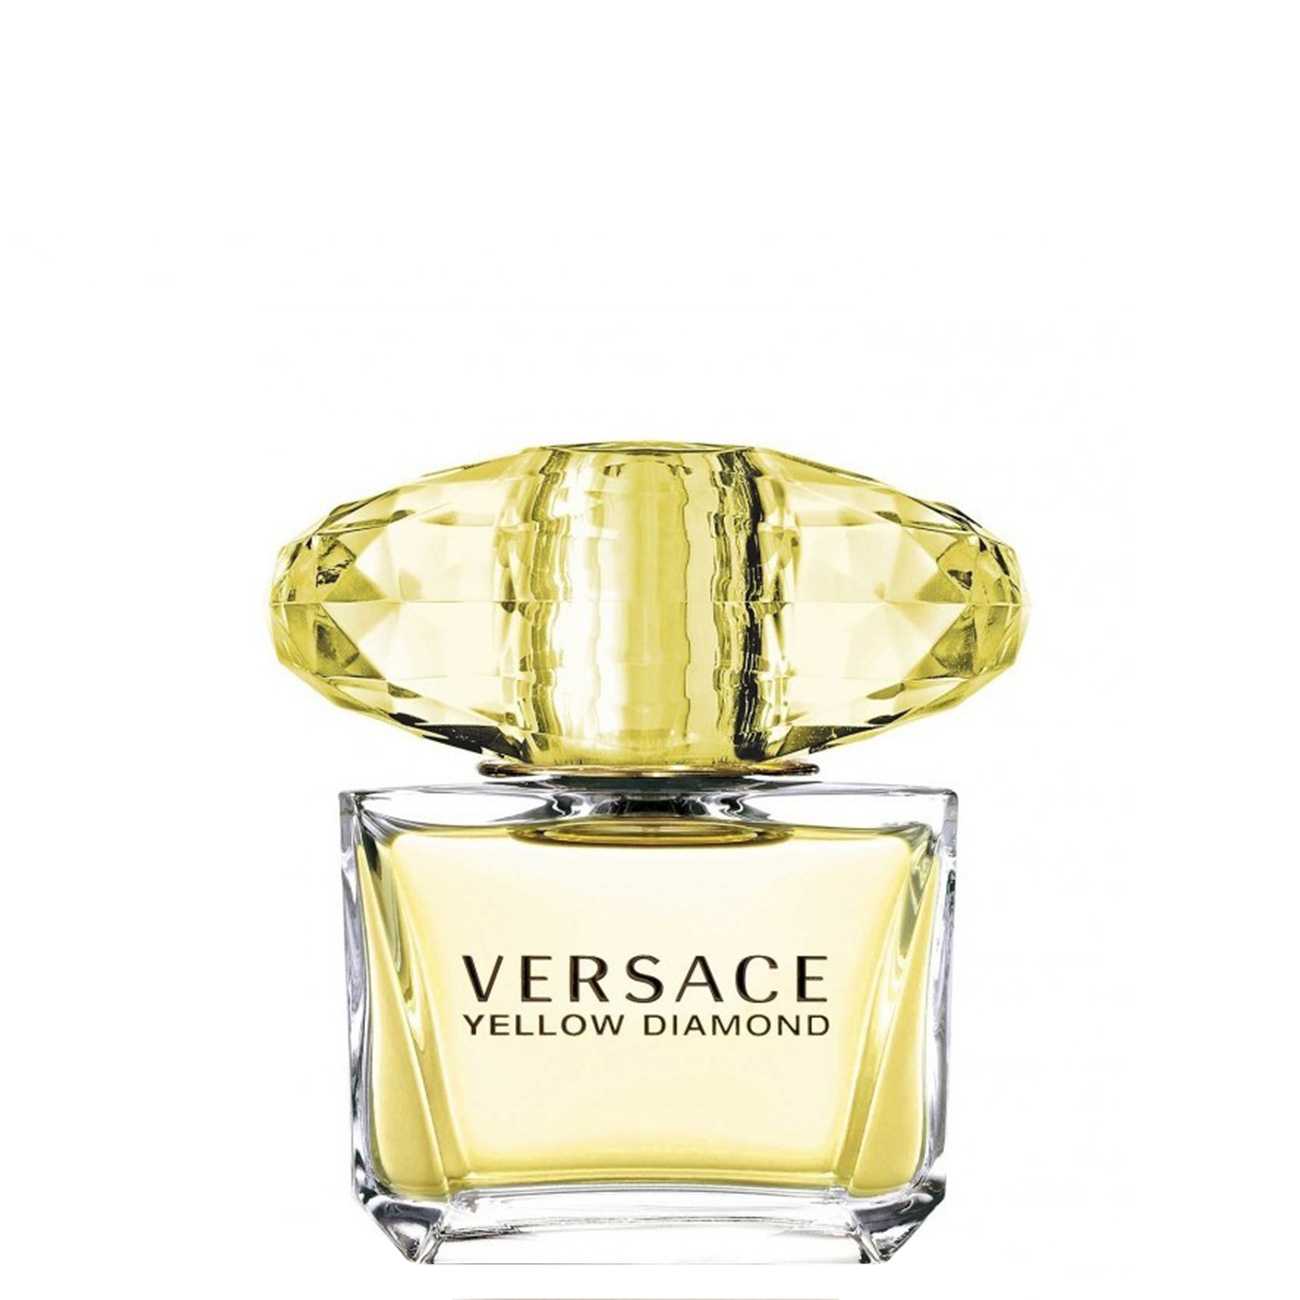 Apa de Toaleta Versace YELLOW DIAMOND 50ml cu comanda online